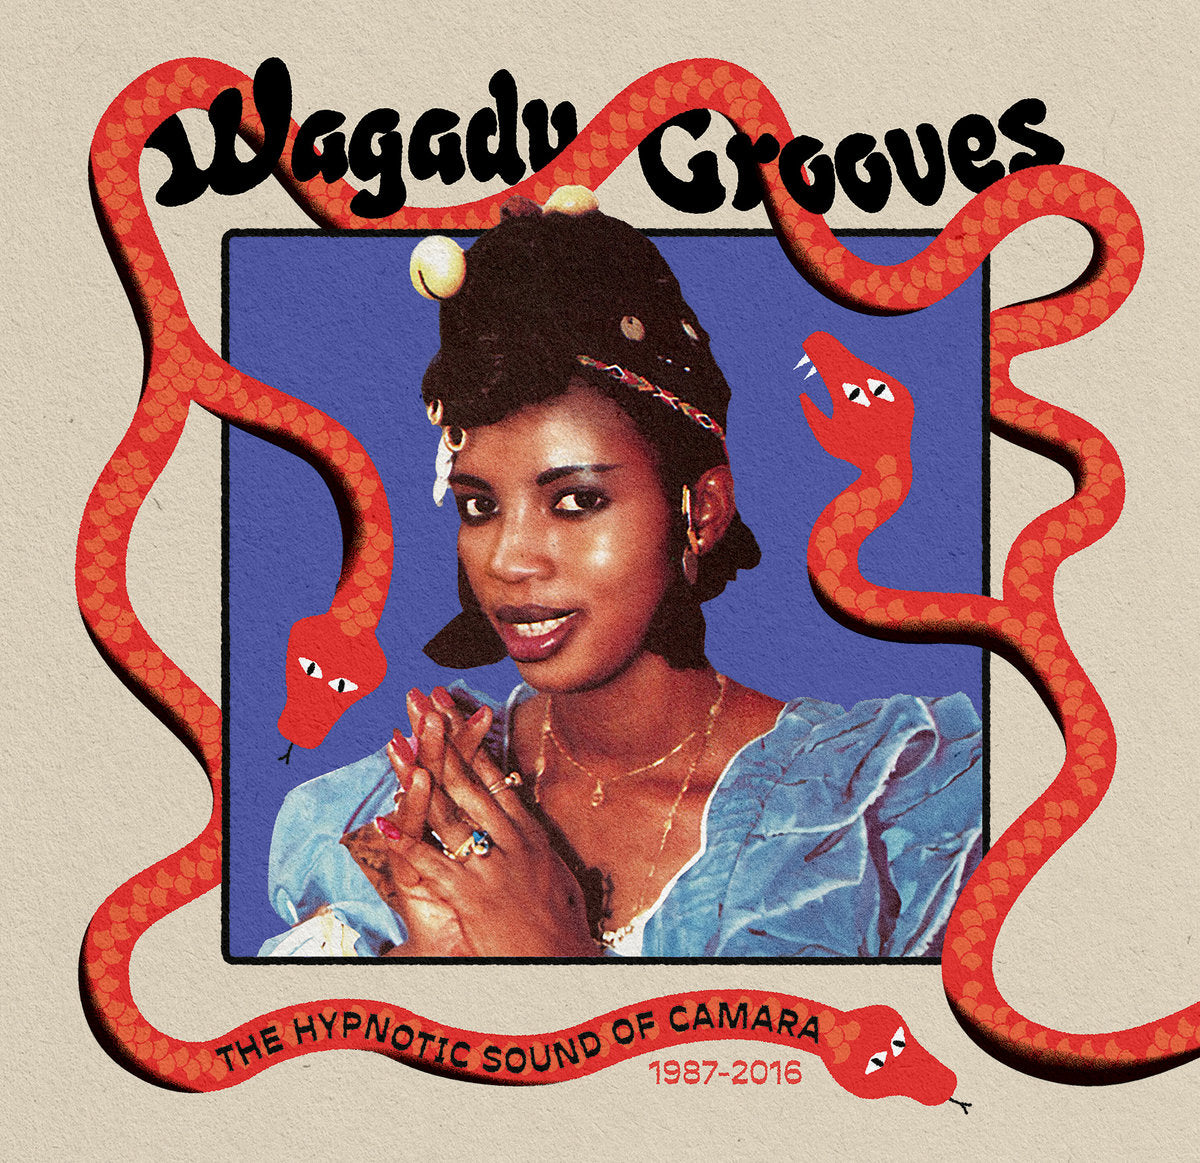 V/A - Wagadu Grooves - The Hypnotic Sound of Camara 1987-2016